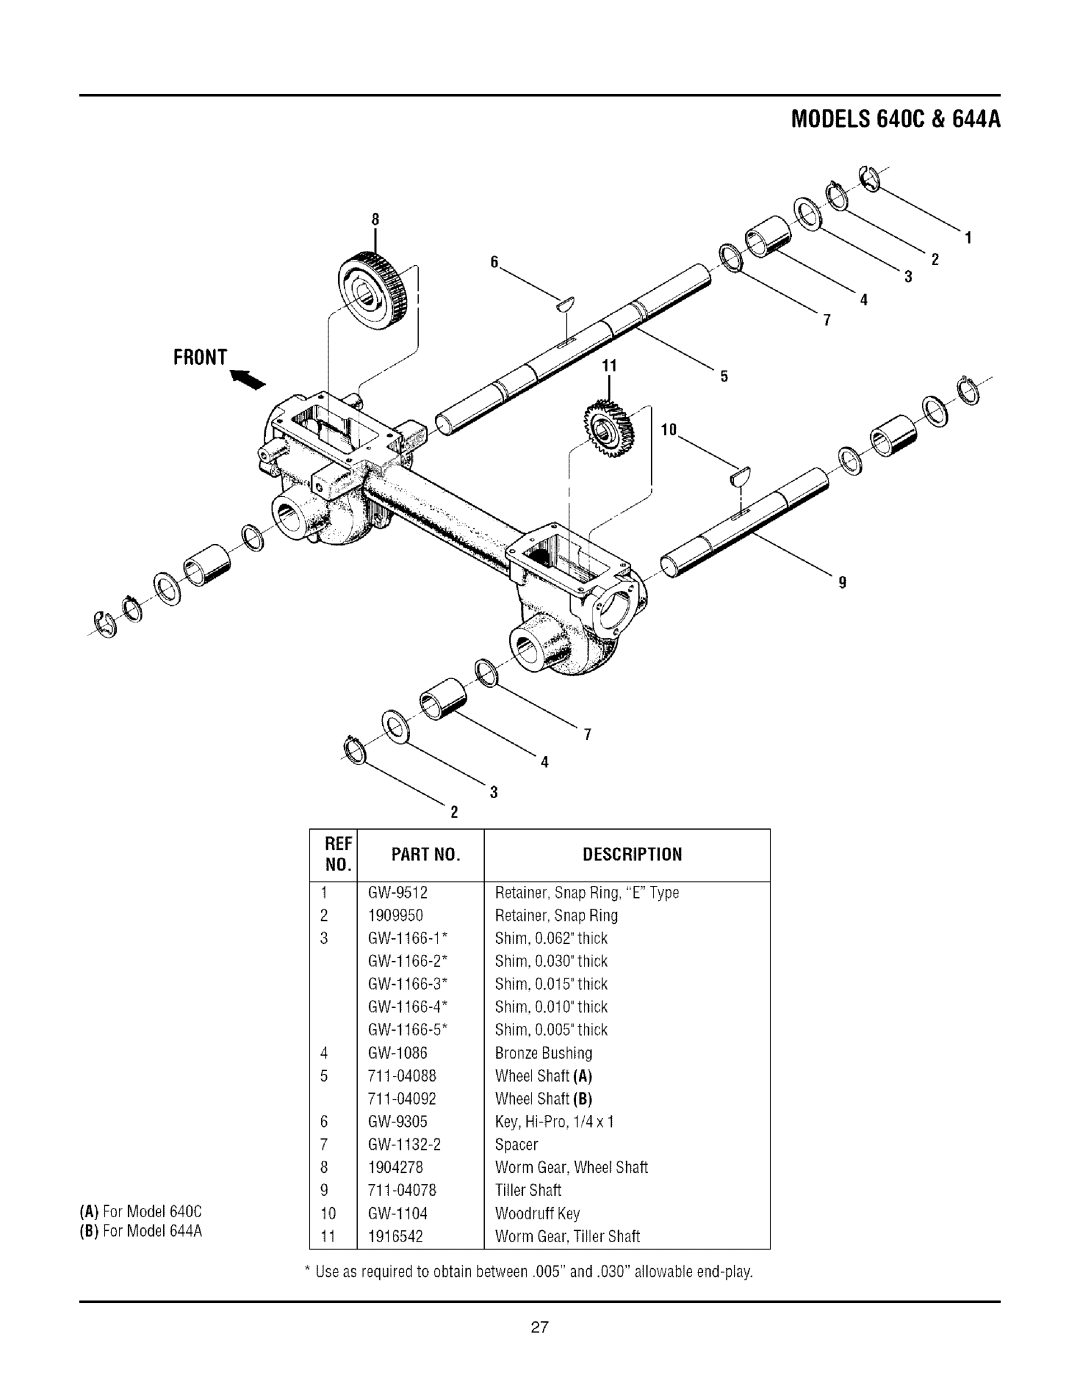 Troy-Bilt manual Front, MODELS640C & 644A, Partno, Description 